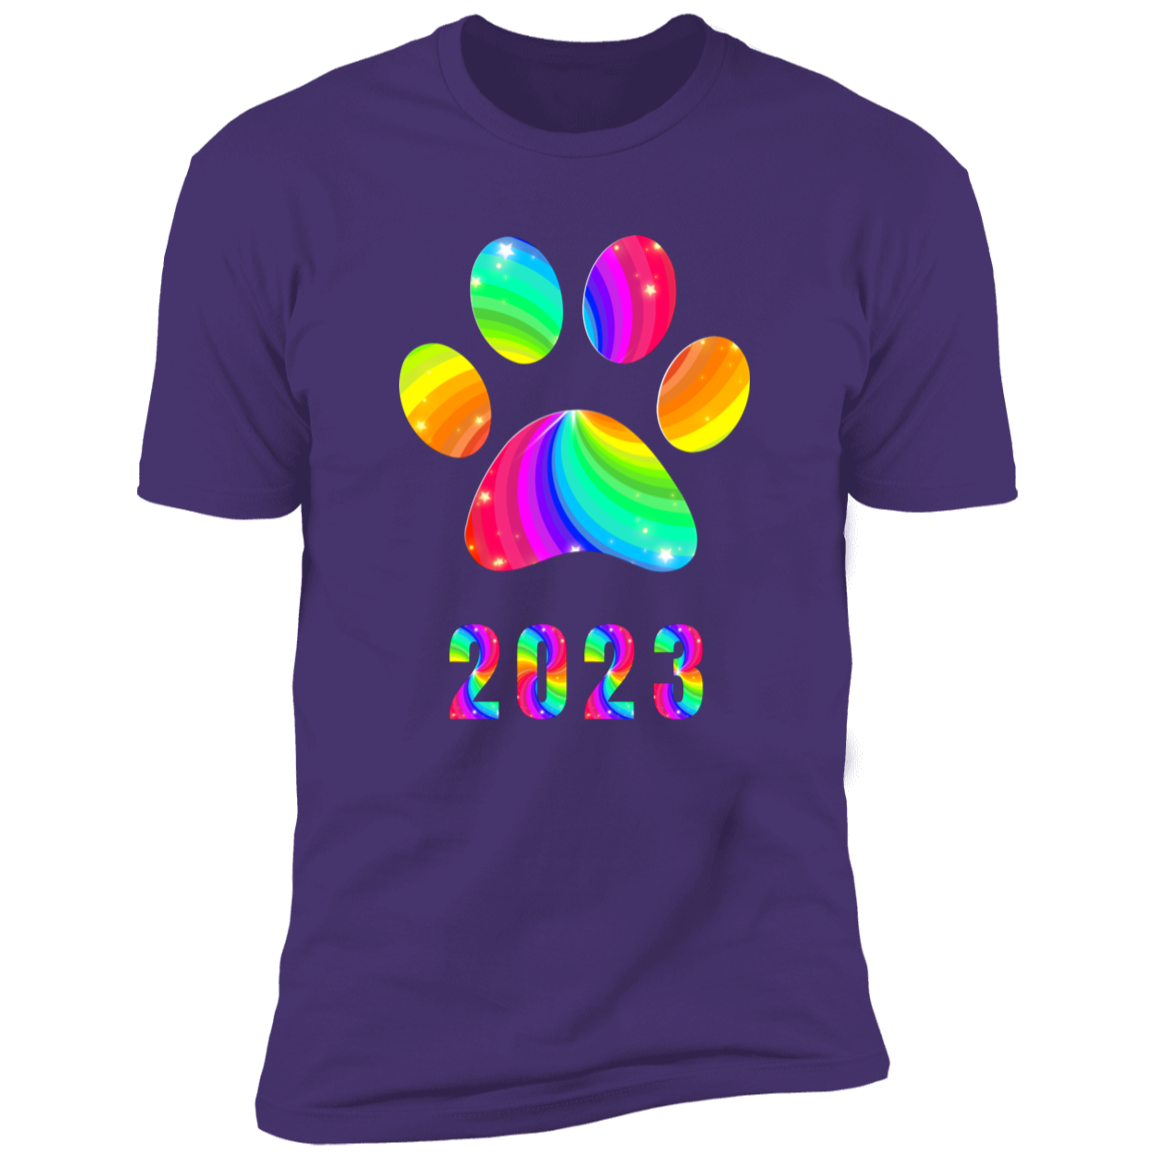 Pride Paw 2023 (Swirl) Pride T-shirt, Paw Pride Dog Shirt for humans, in purple rush